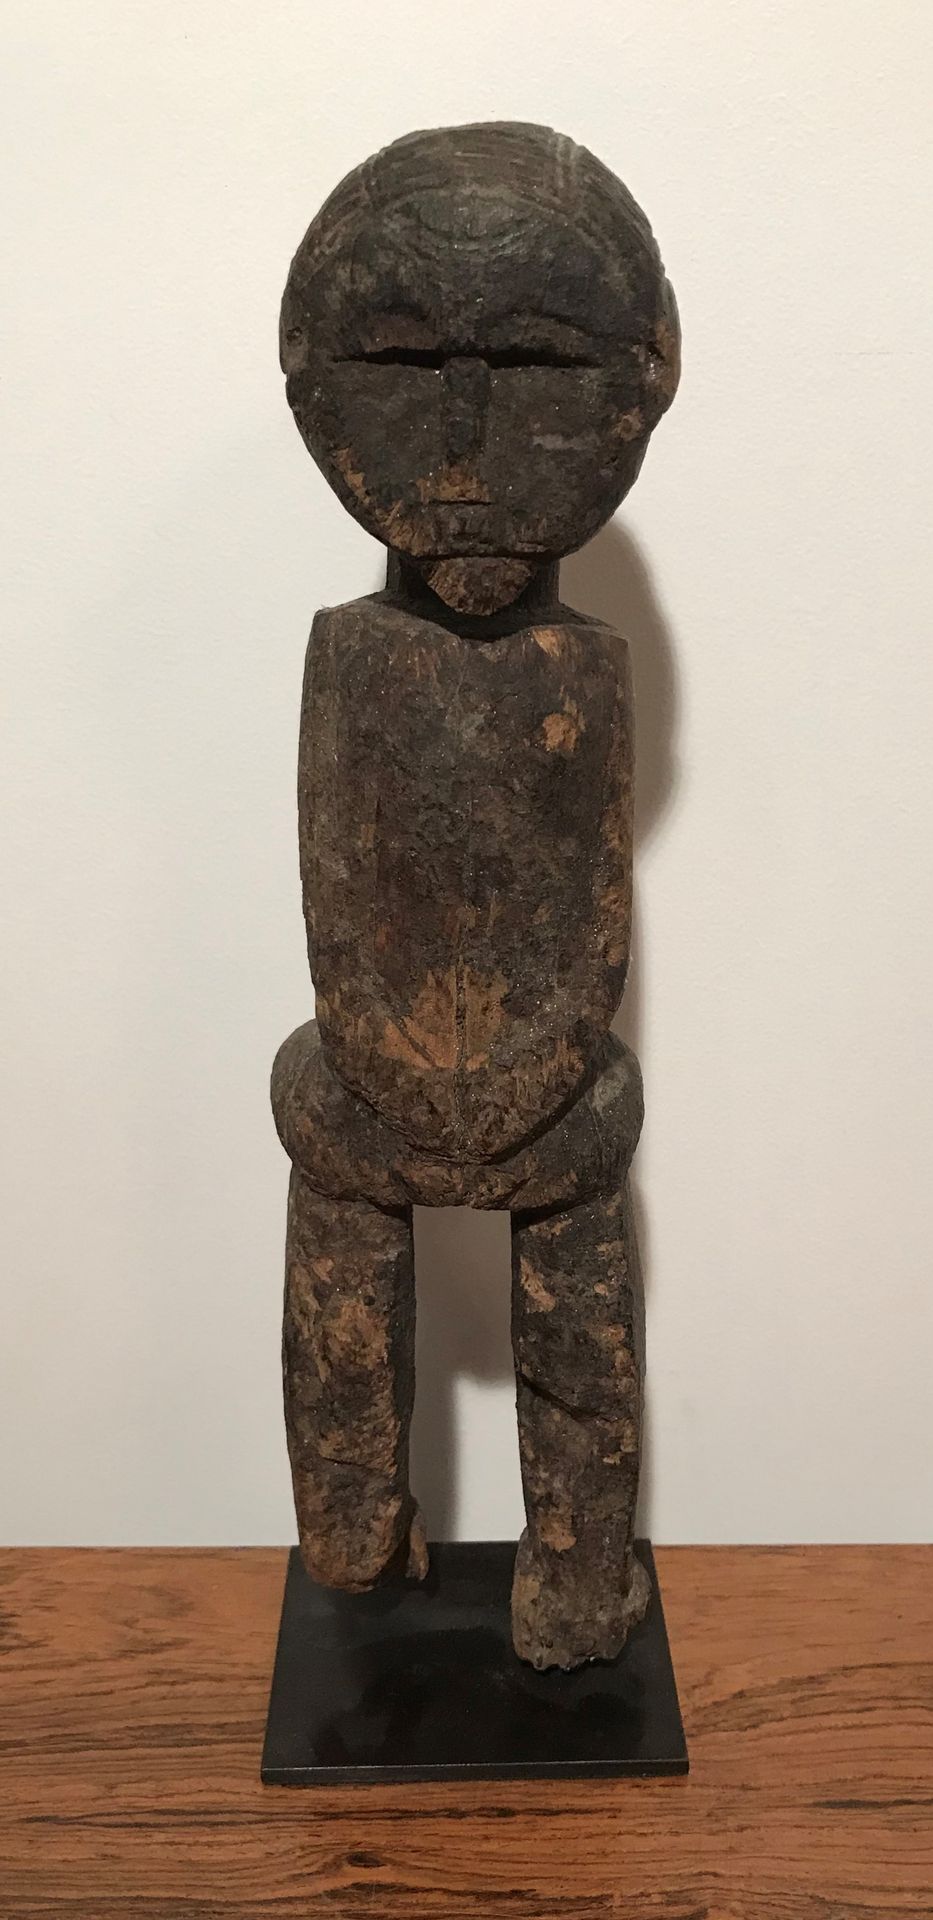 Null Statuette. Baule people. Ivory Coast 
H.: 25 cm.